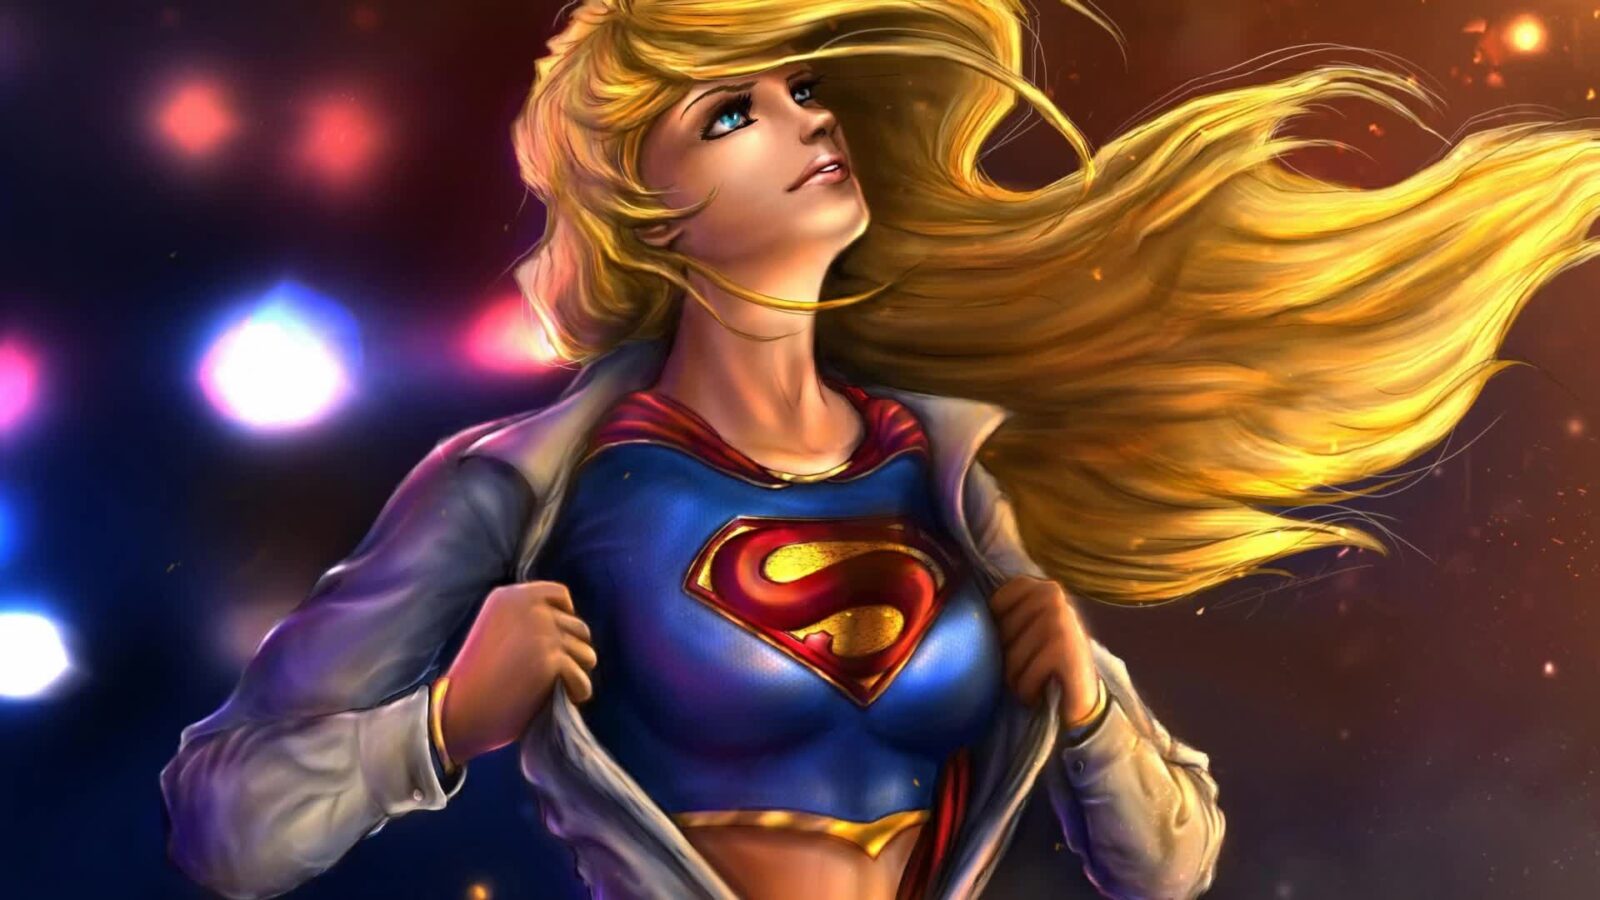 Beautiful Blonde Supergirl Artwork - Free Animated Wallpaper - Live